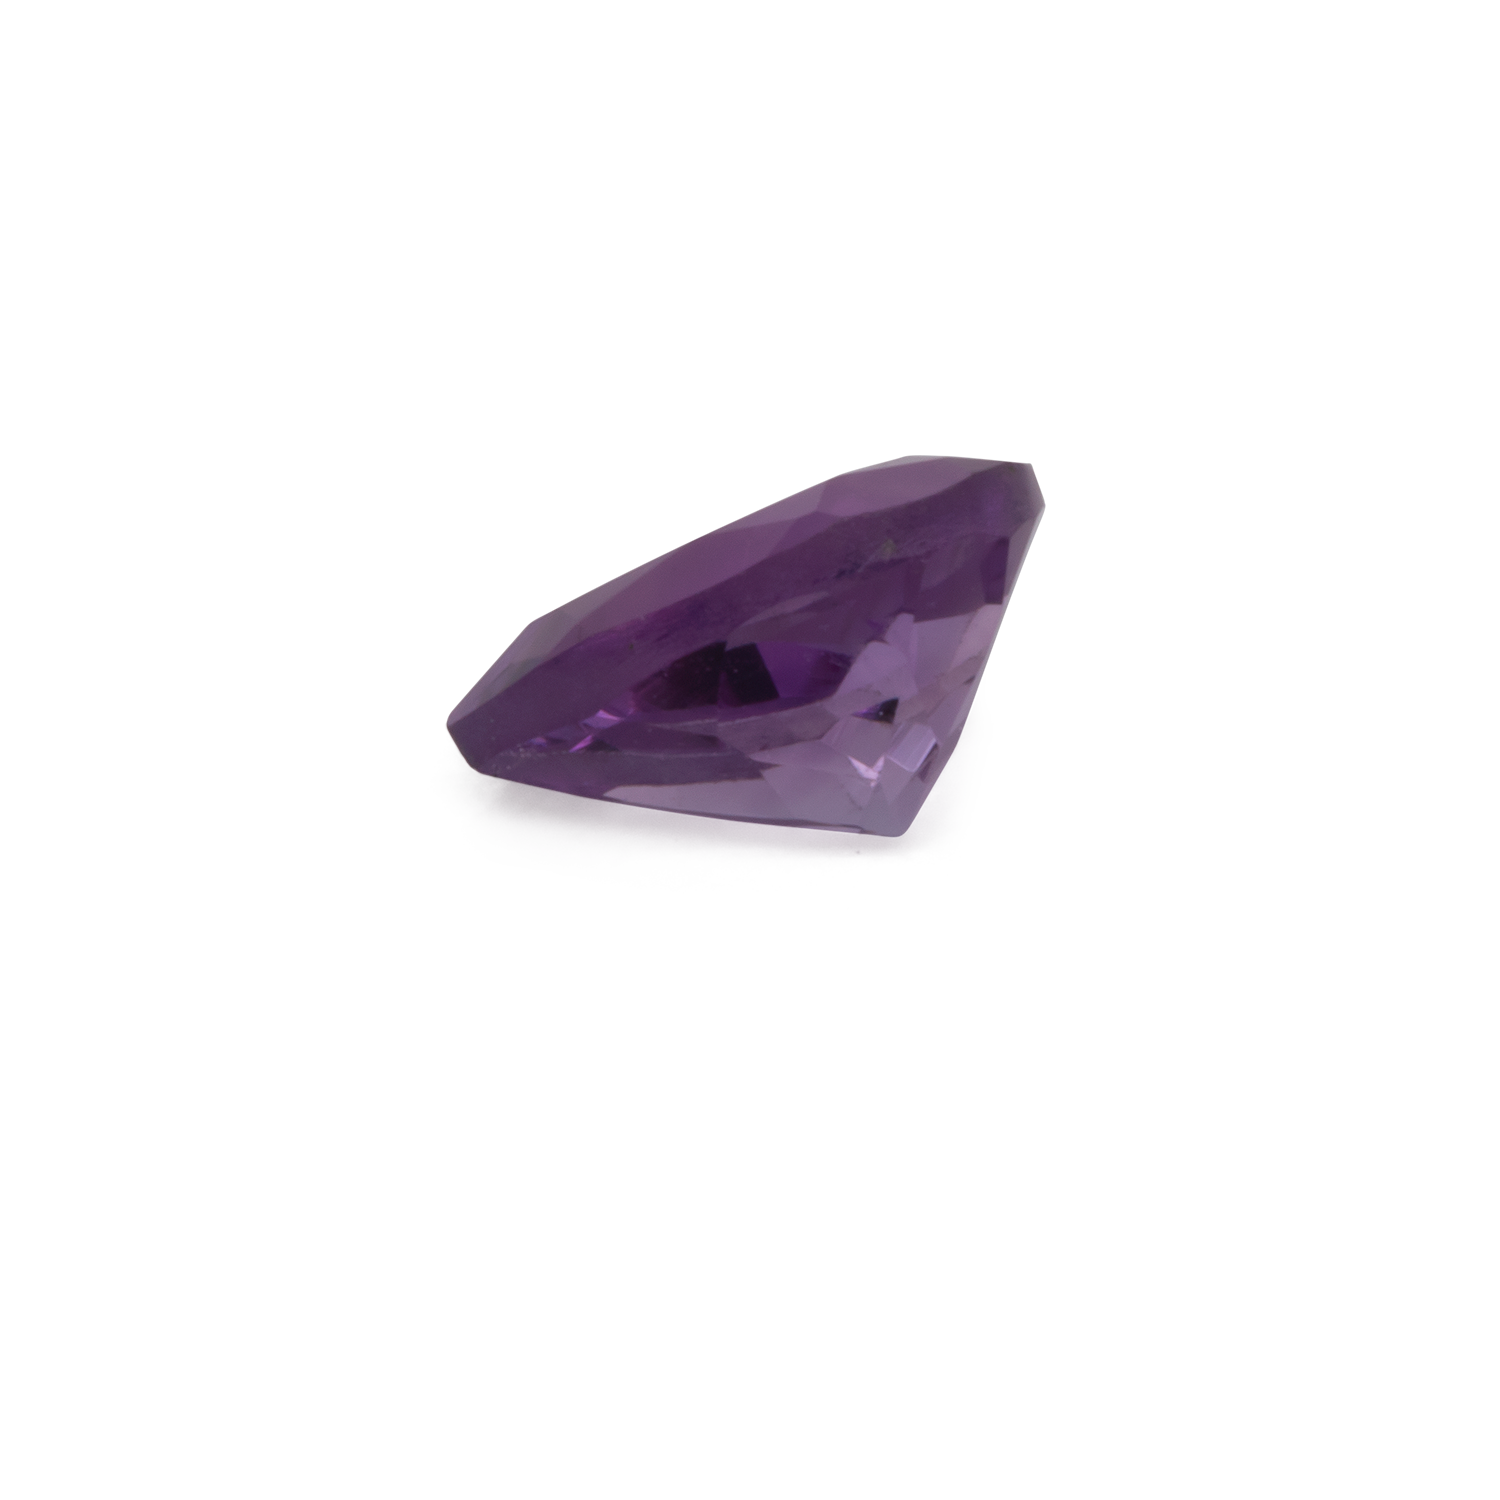 Amethyst - purple, pearshape, 5x4 mm, 0.23-0.30 cts, No. AMY58001